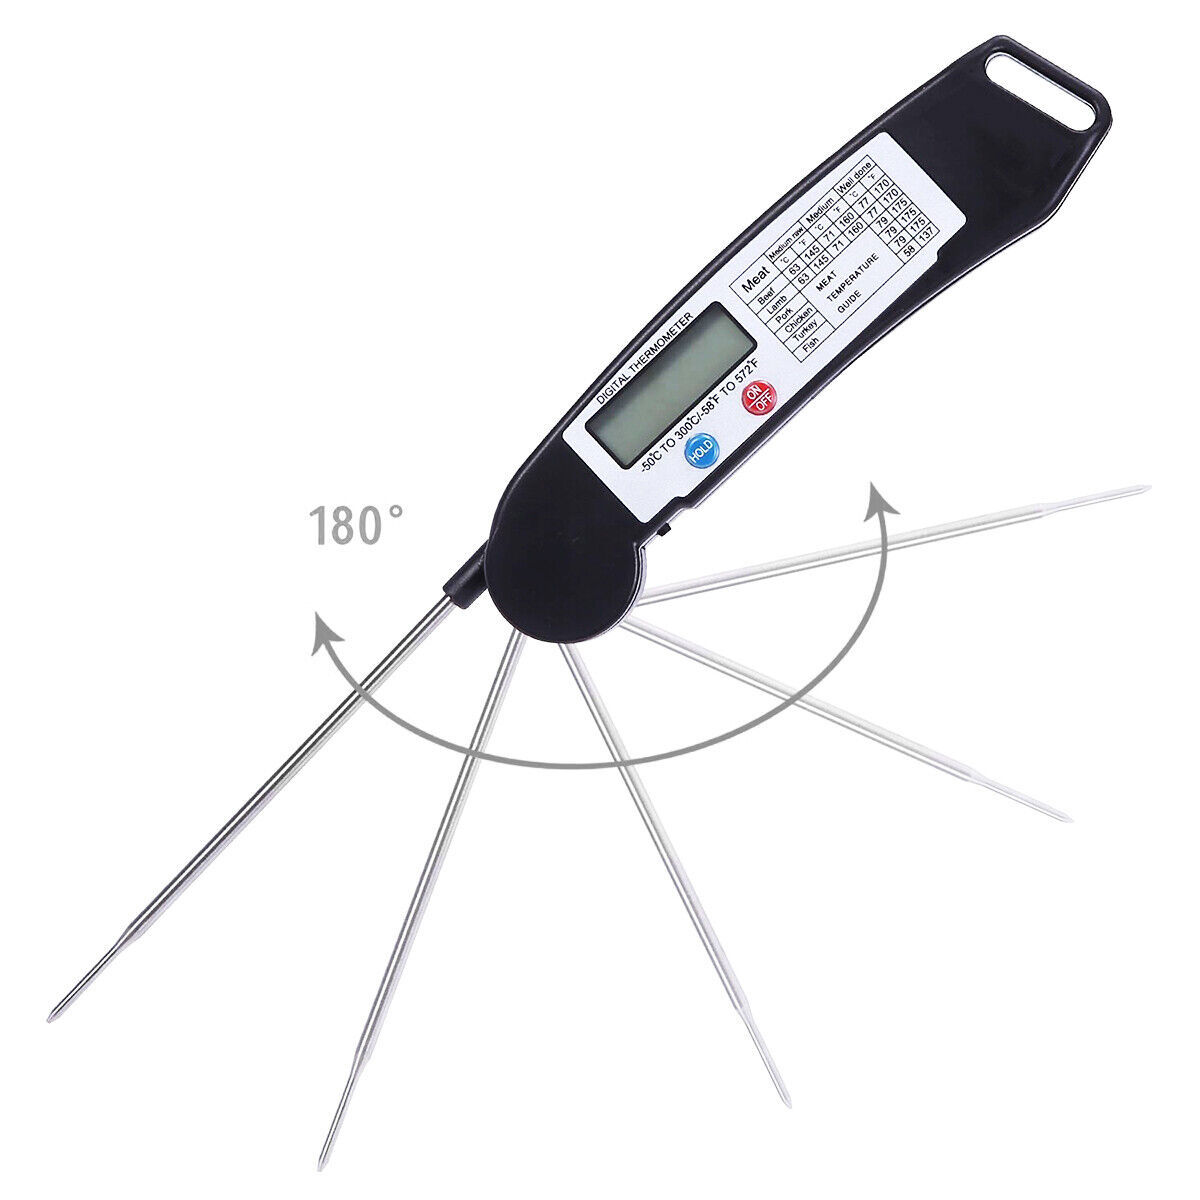 Habor 192 Digital Meat Thermometer Backlit Display Magnetic 2 Sec